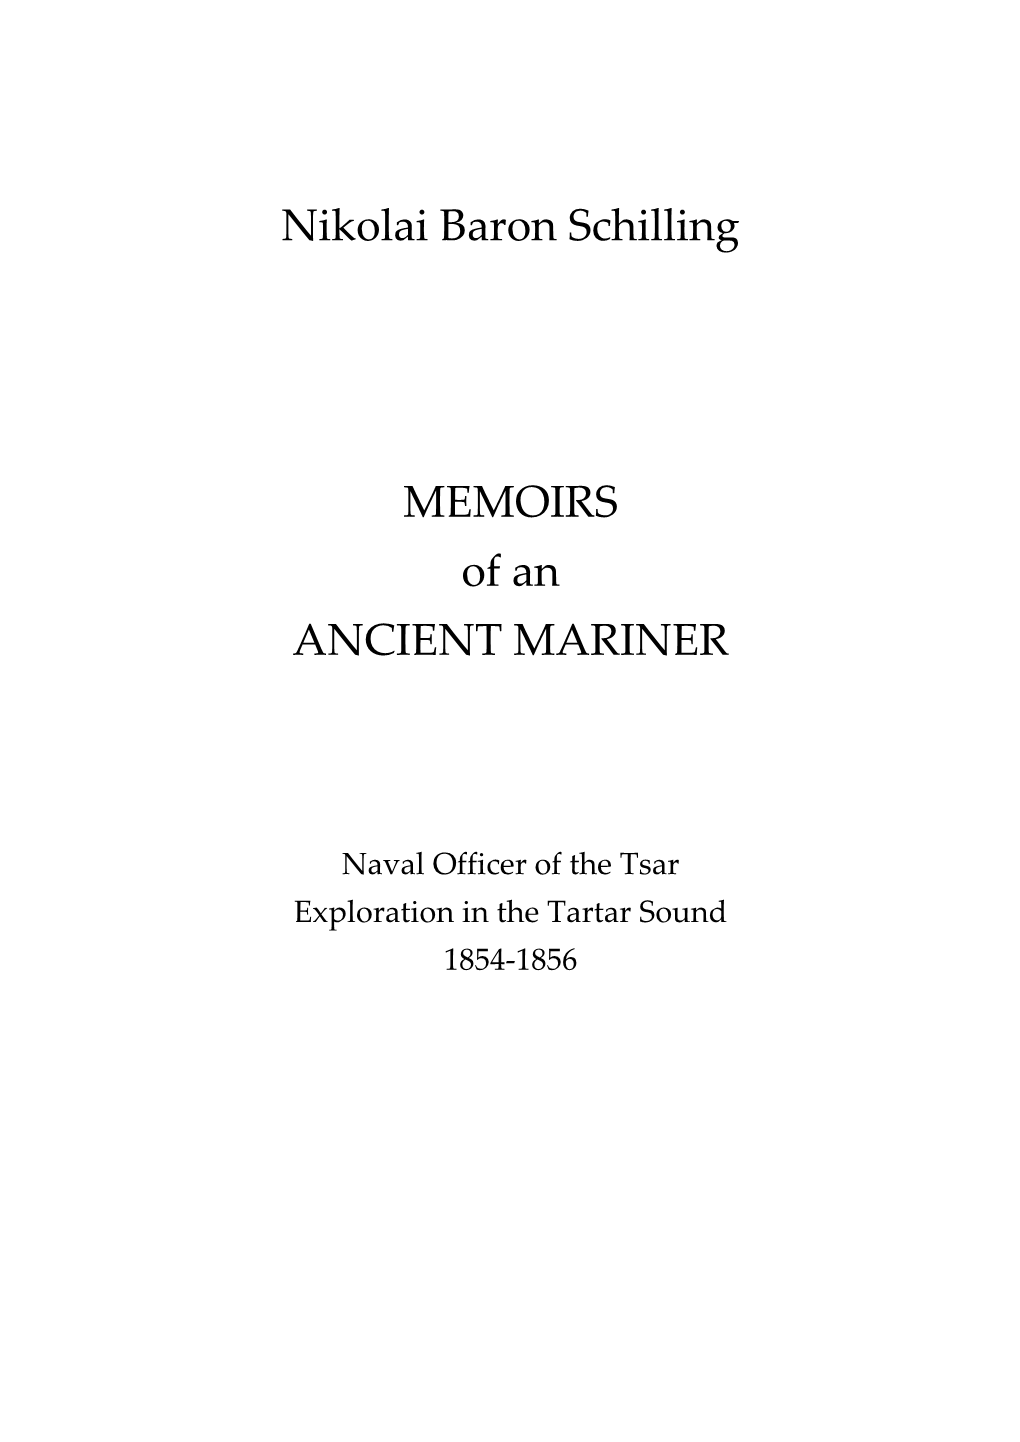 Nikolai Baron Schilling MEMOIRS of an ANCIENT MARINER